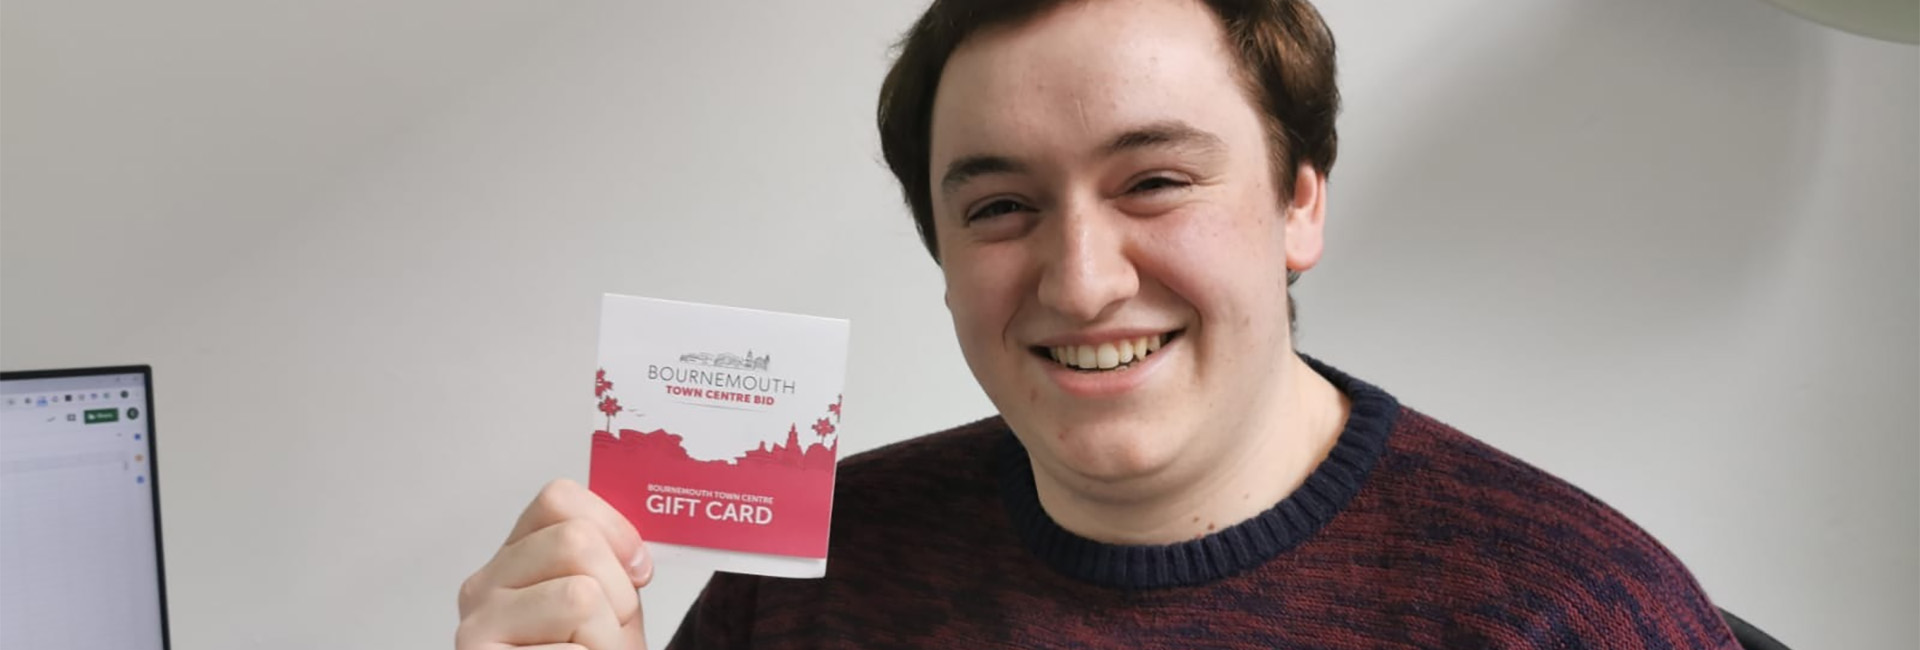 Digital Storm adopt the Bournemouth Town Centre BID’s new gift card in new staff bonus scheme